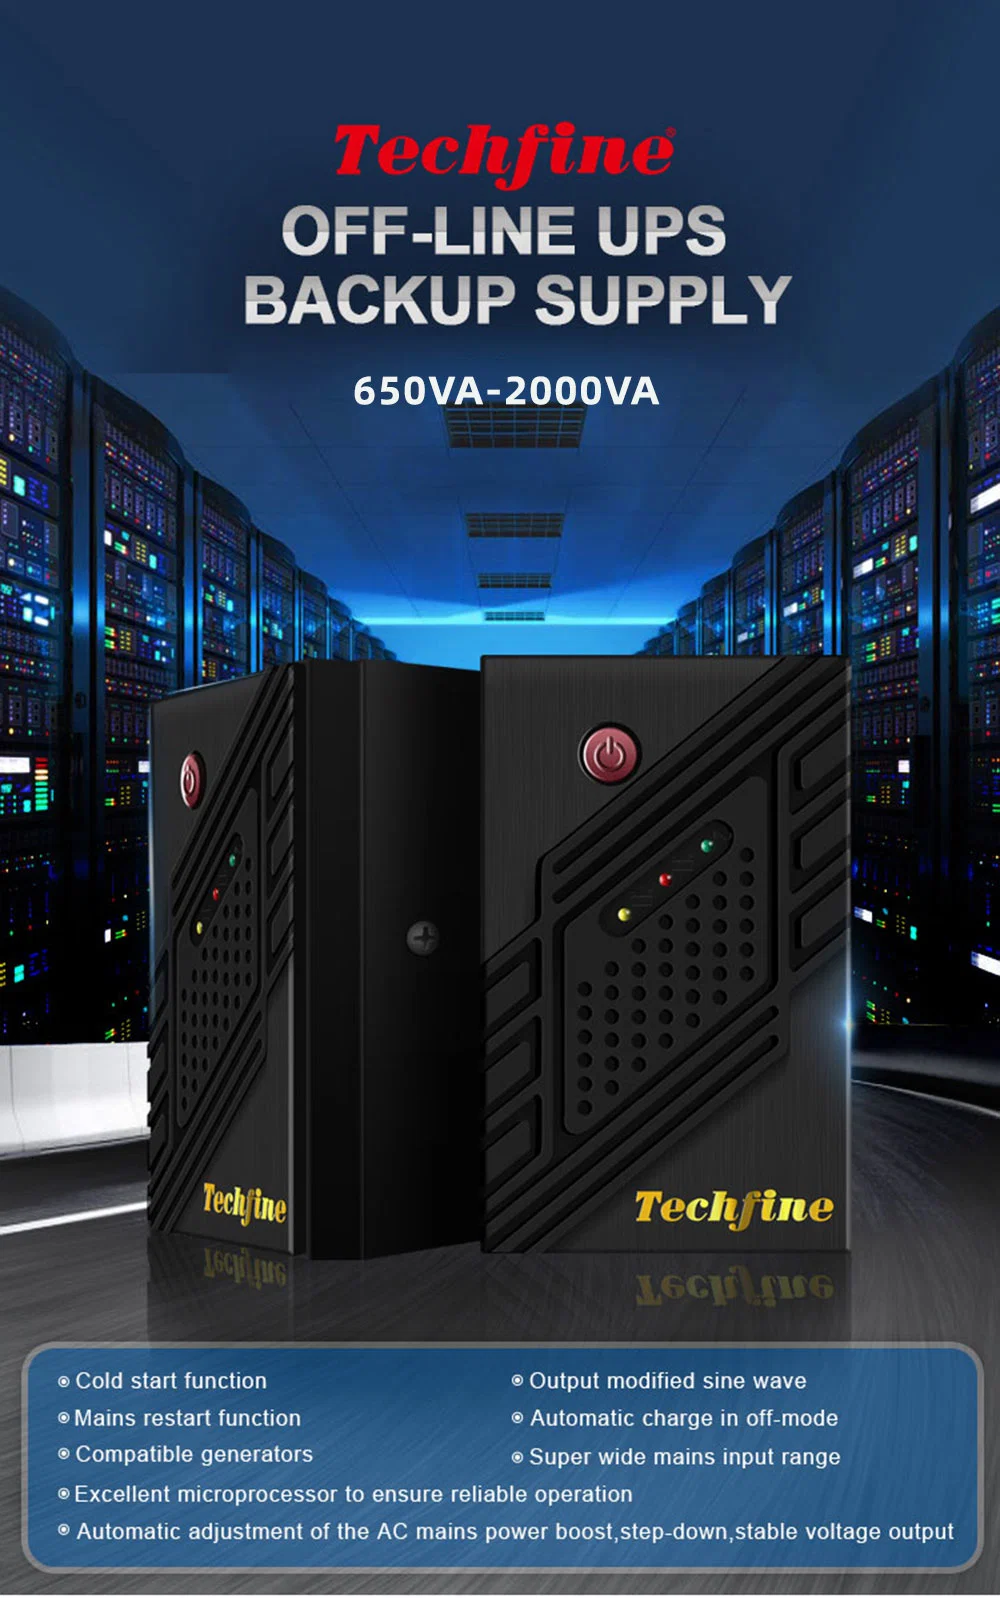 Techfine UPS Uninterruptible Power Supply 12V Offline UPS for Computer